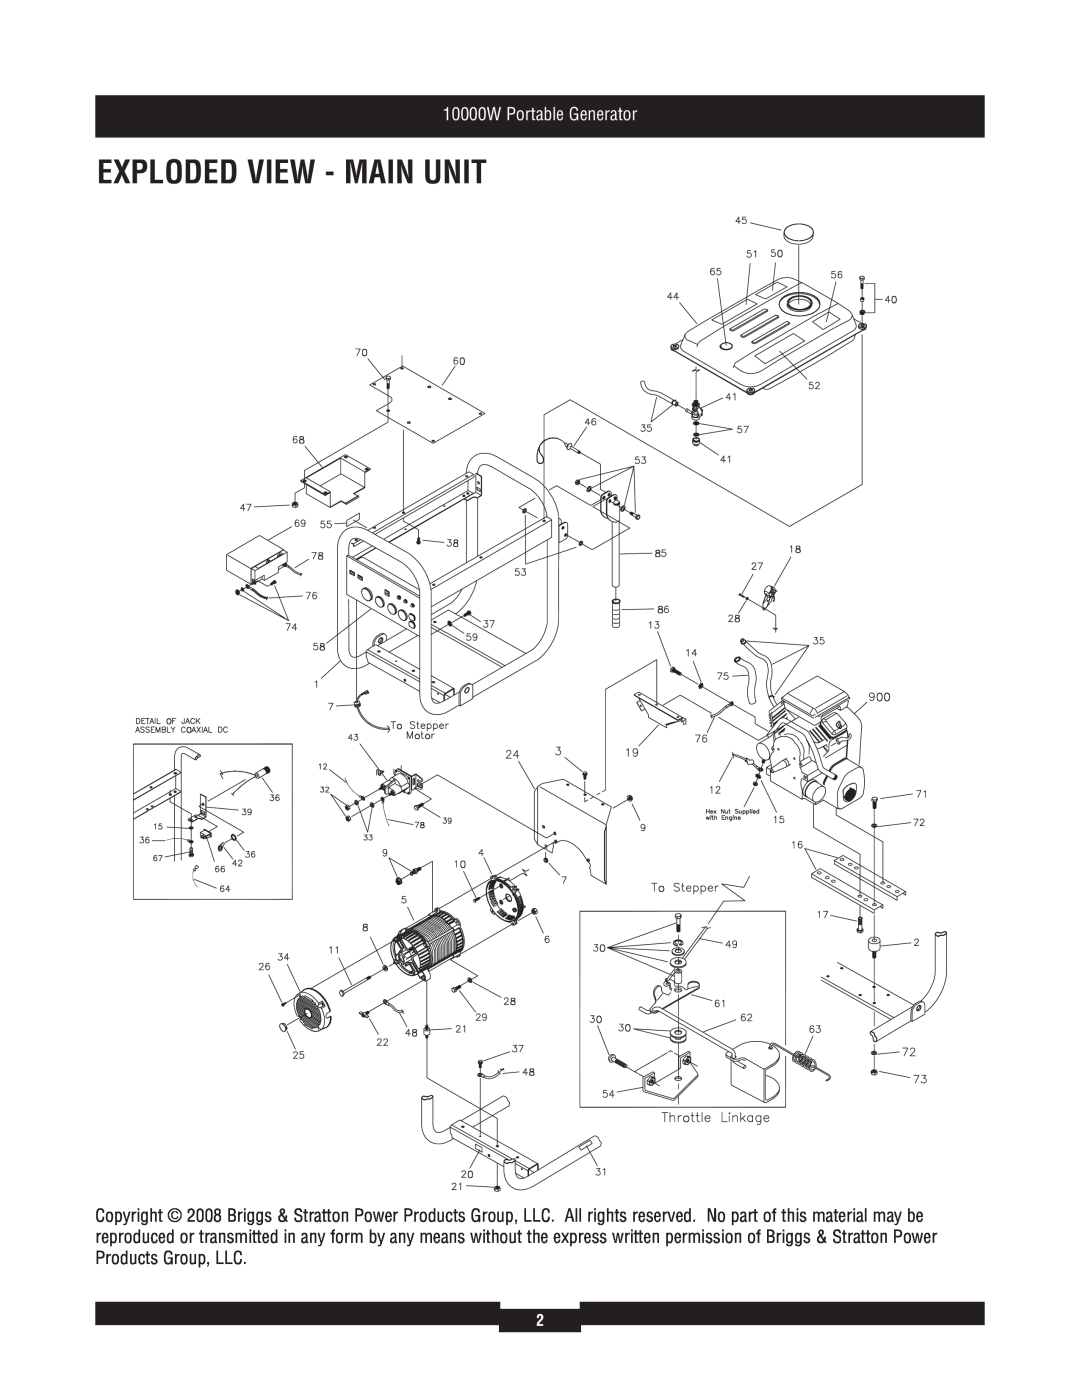 Briggs & Stratton 30207 manual Exploded View - Main Unit, 10000W Portable Generator 